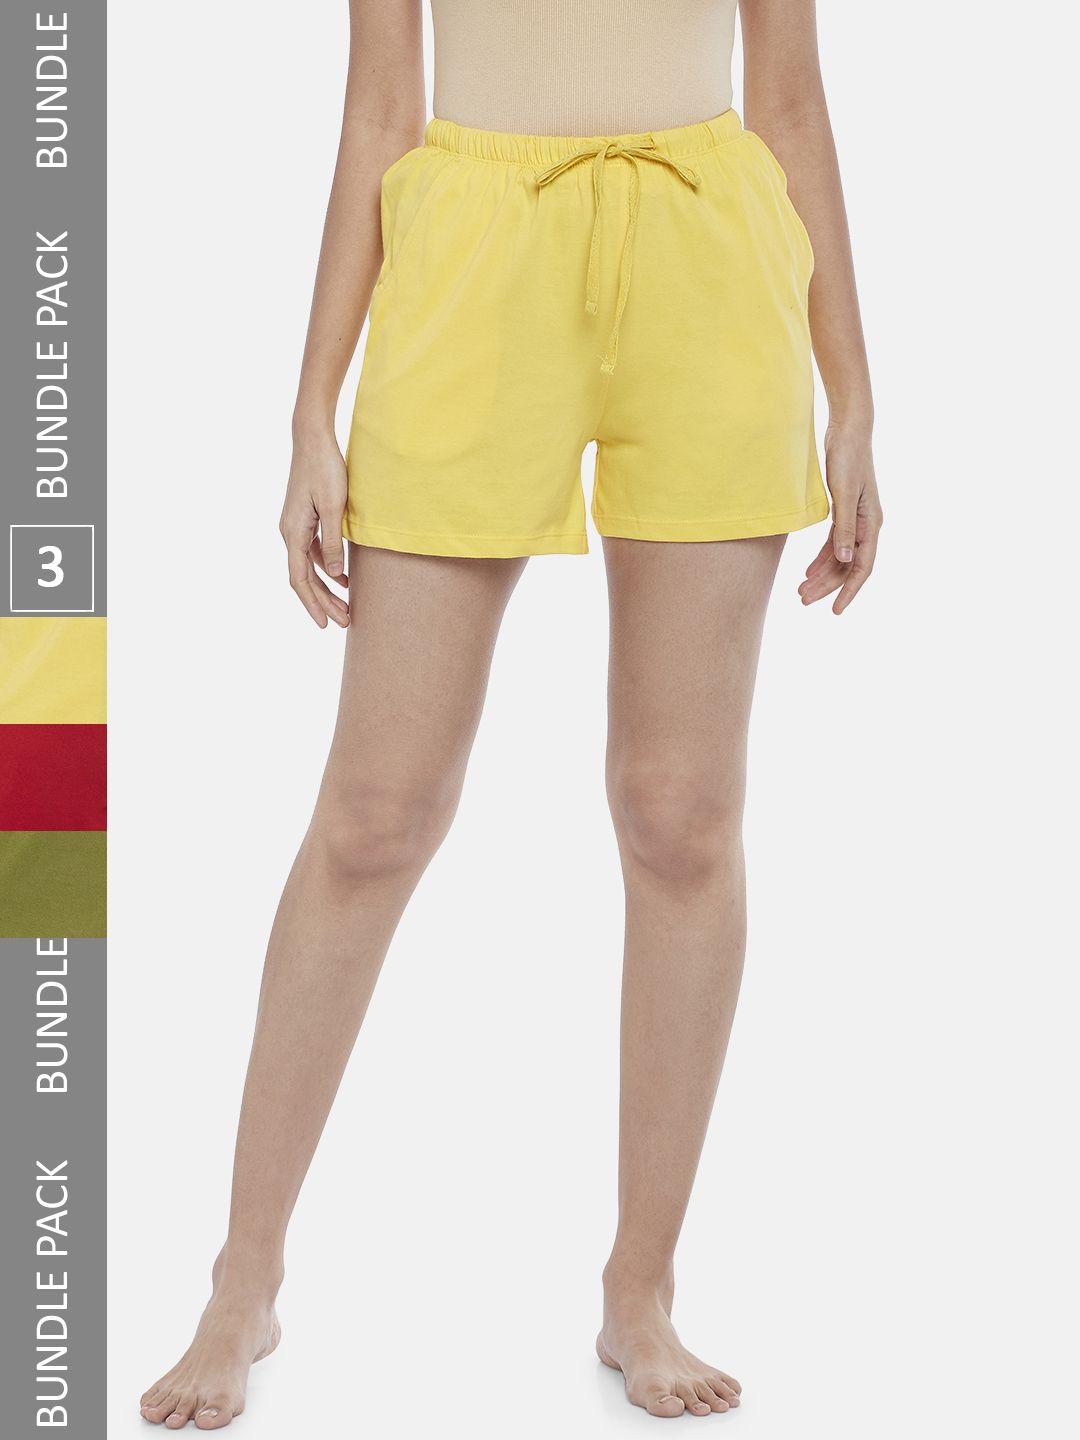 dreamz by pantaloons women yellow & red 3 lounge shorts